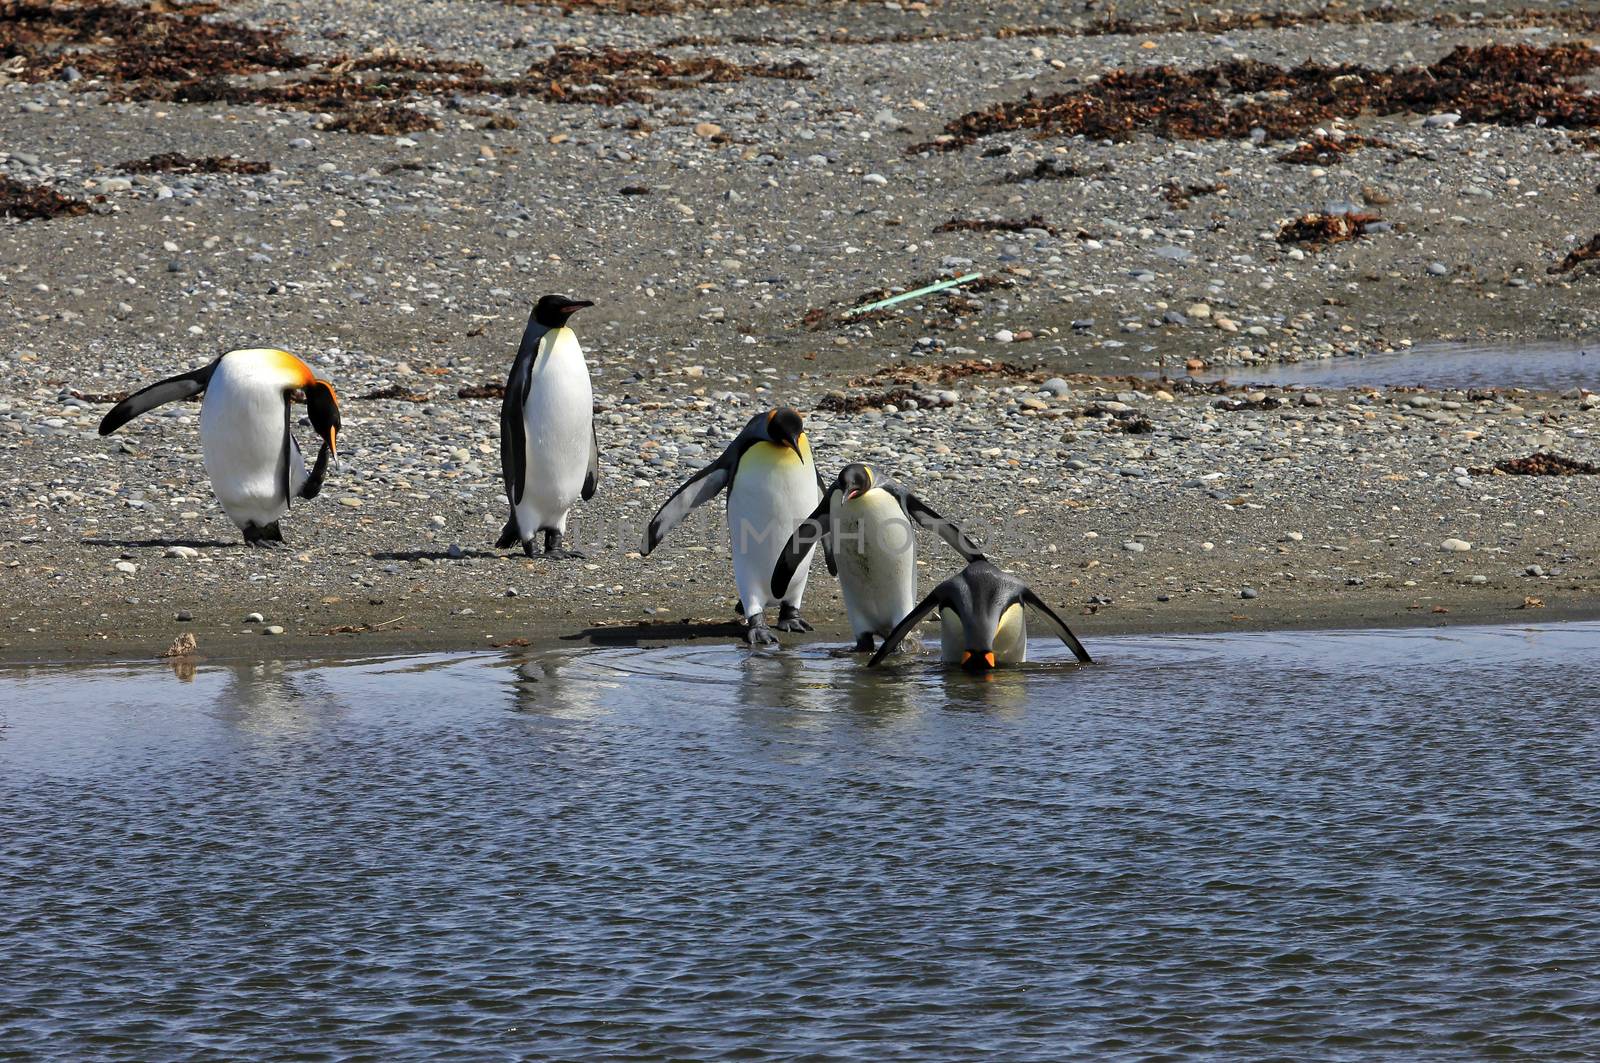 King penguins living wild at Parque Pinguino Rey, Tierra Del Fuego, Patagonia, Chile